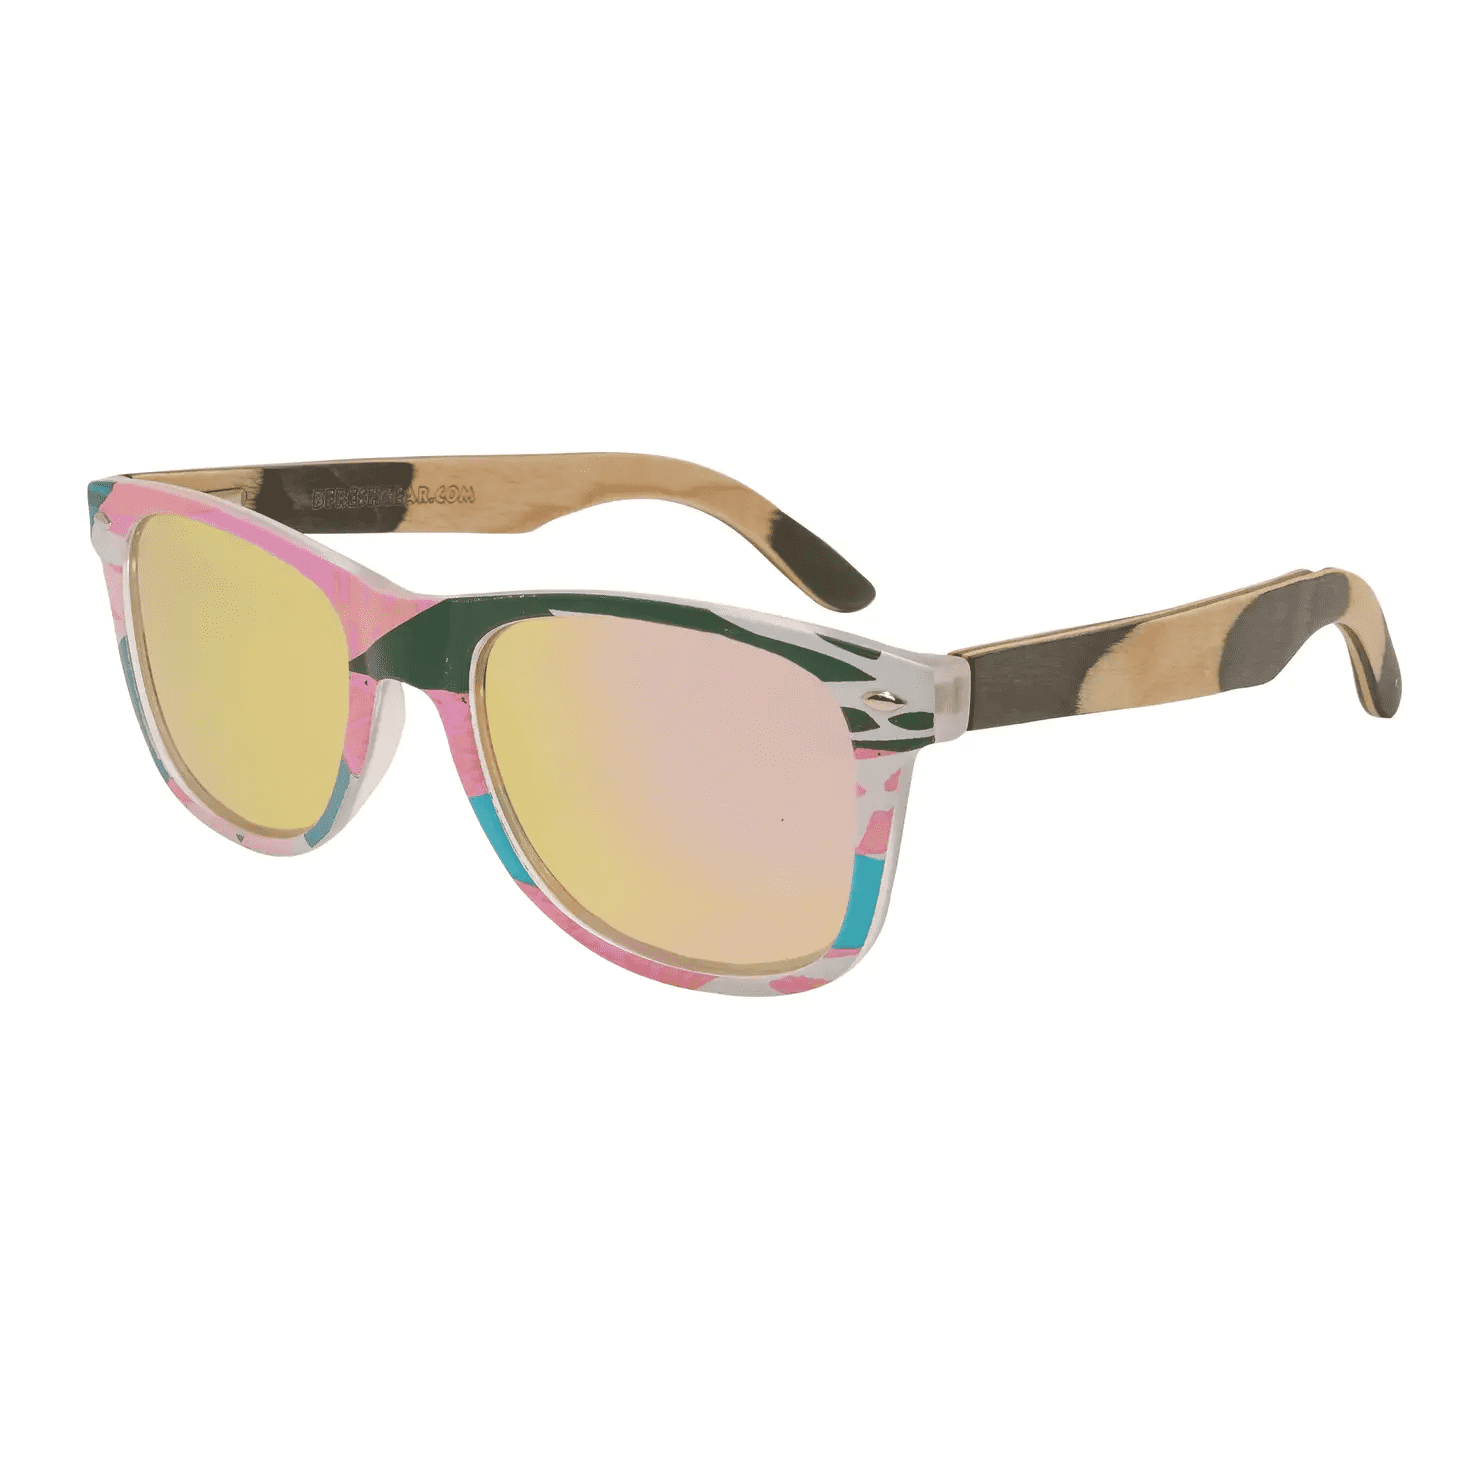 The Cordials - Wooden Skateboard Sunglasses